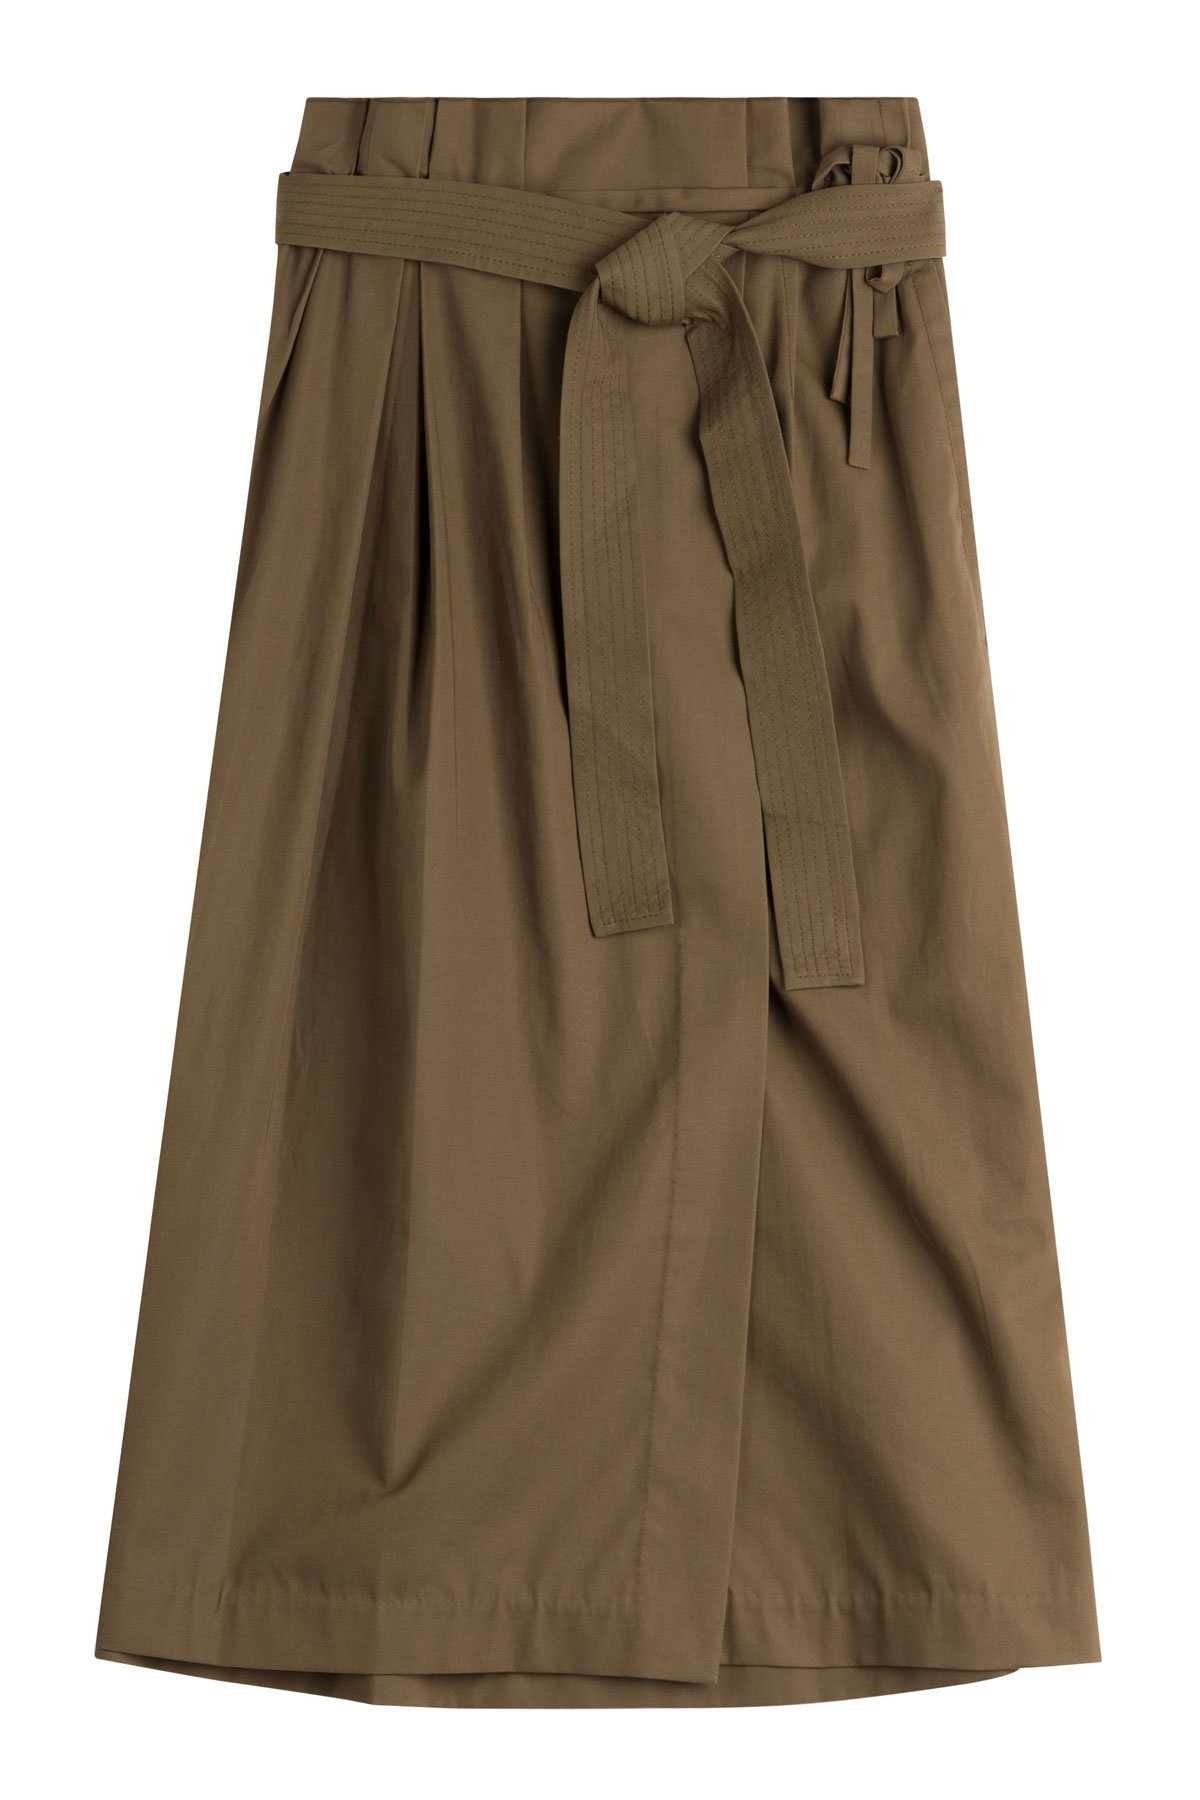 3.1 Phillip Lim - Belted Cotton Skirt